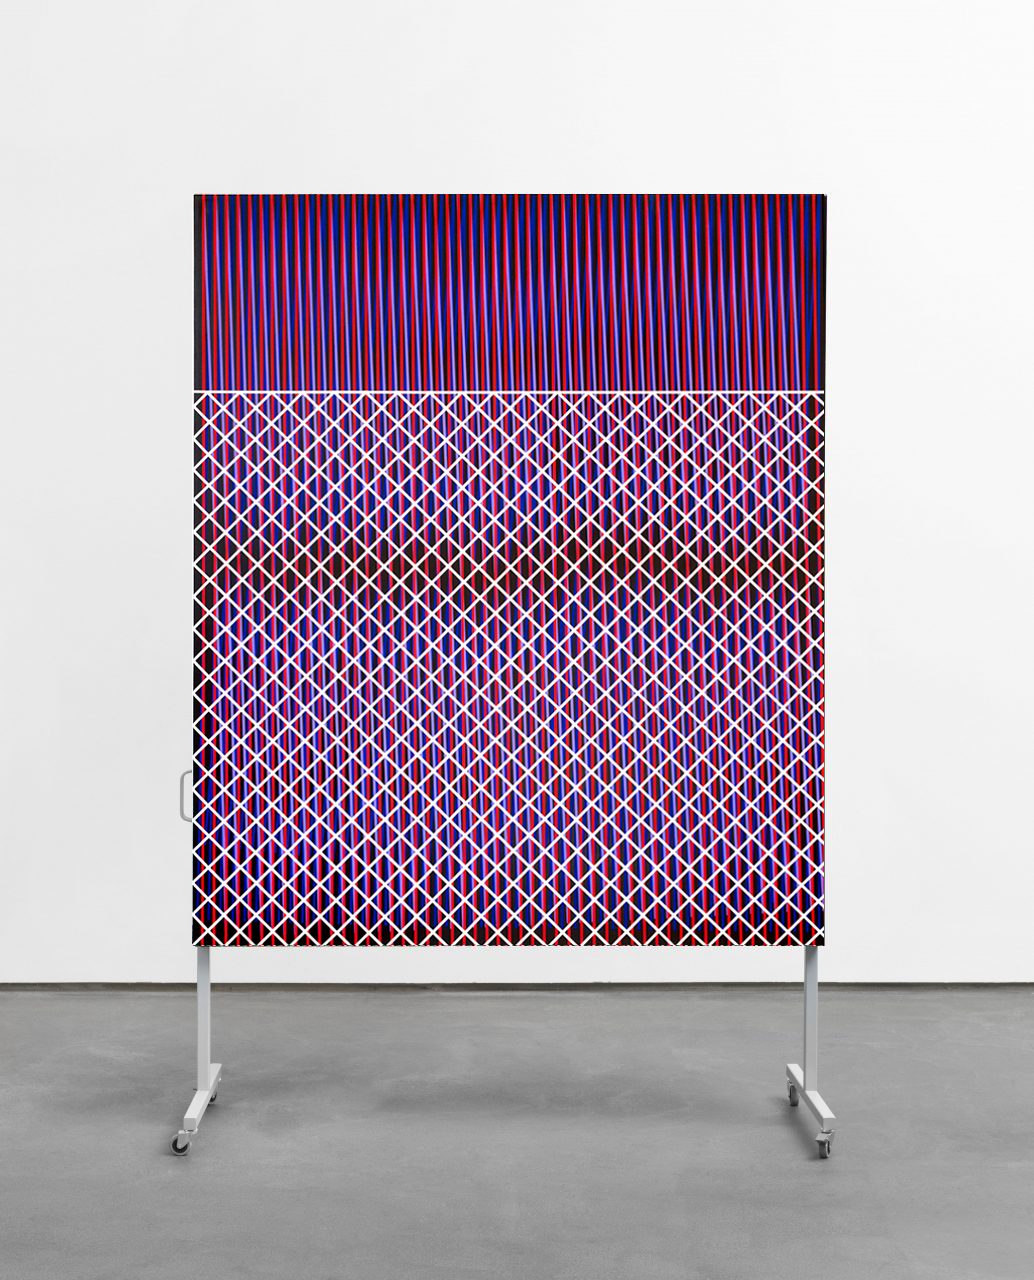 untitled, 2018 /// acrylic on canvas on metal display /// 245 x 155 x 60 cm